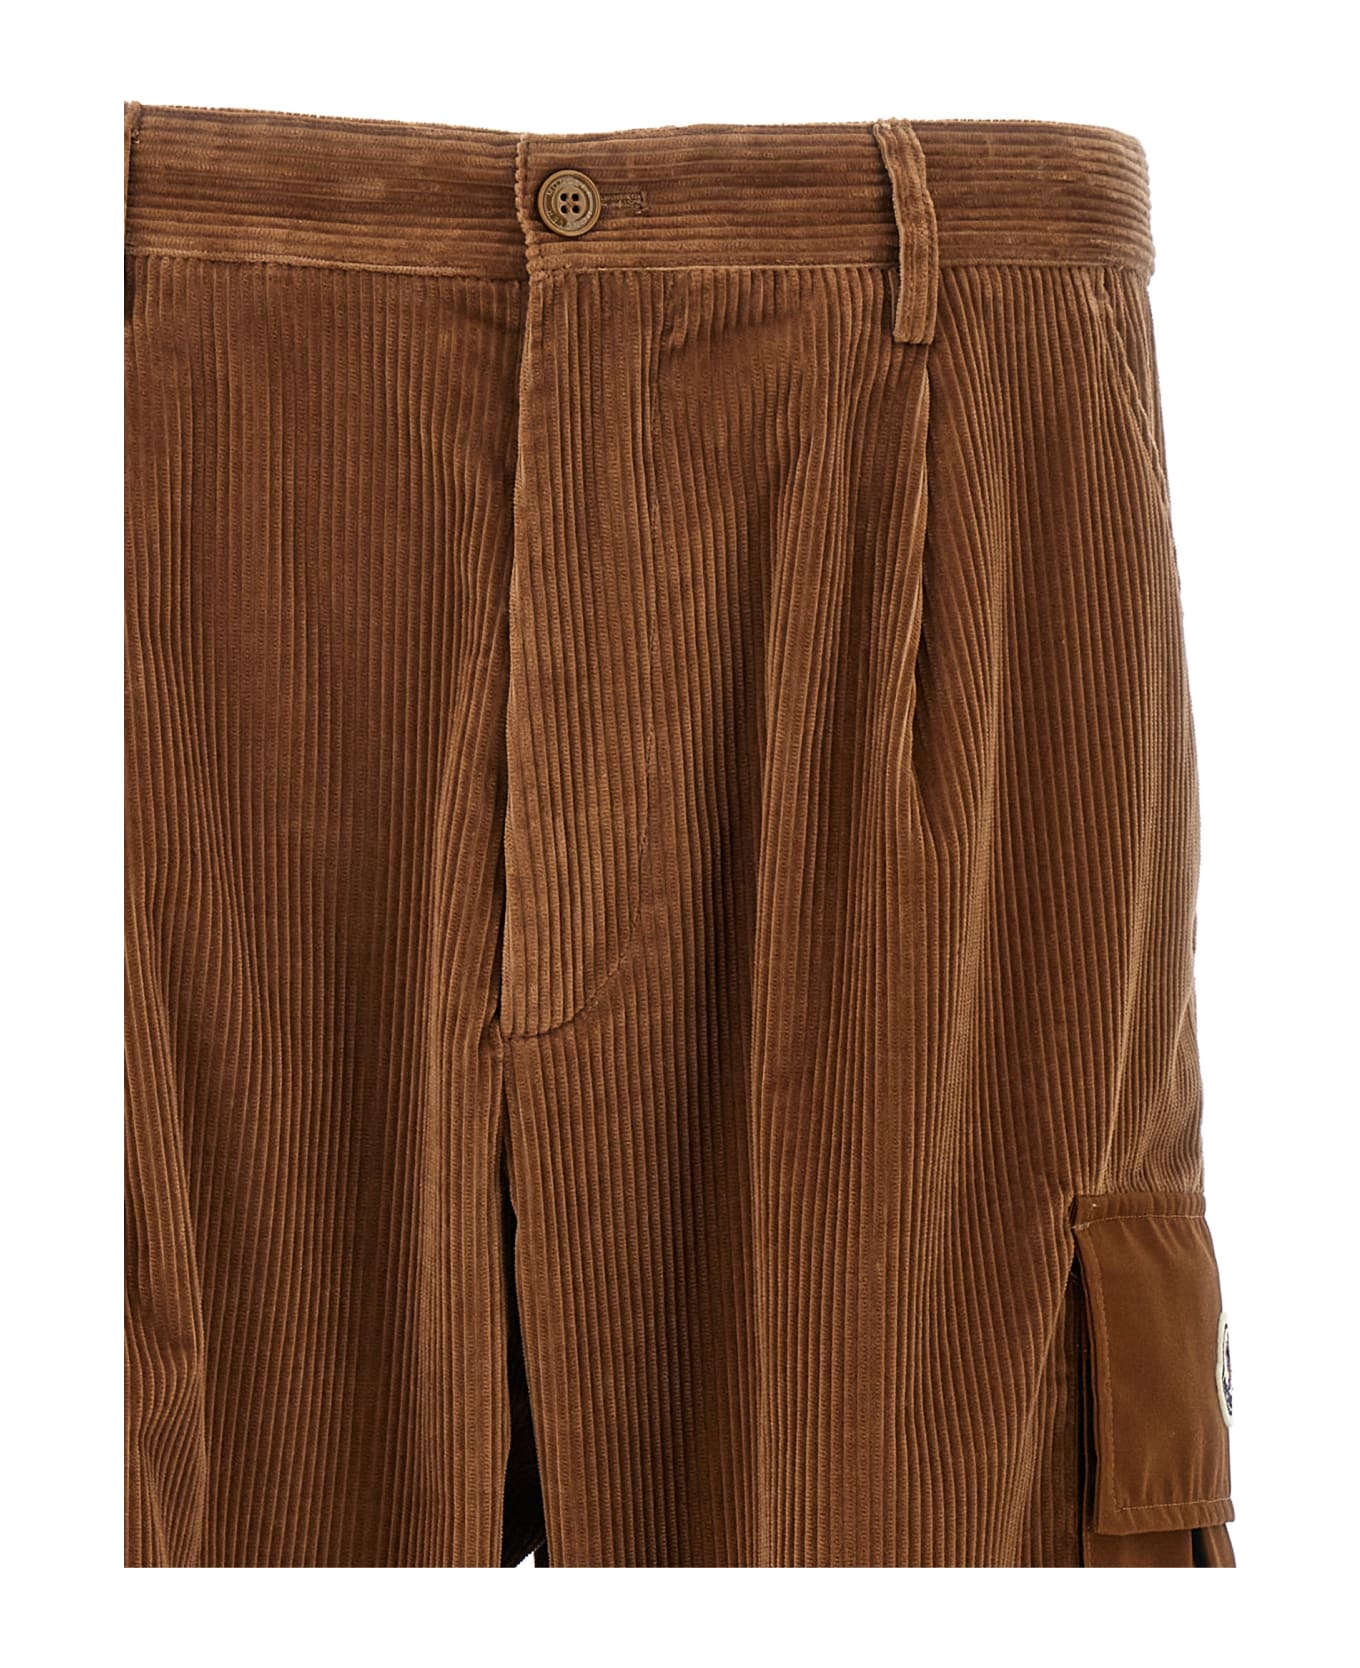 Moncler Ribbed Velvet Pants - Brown